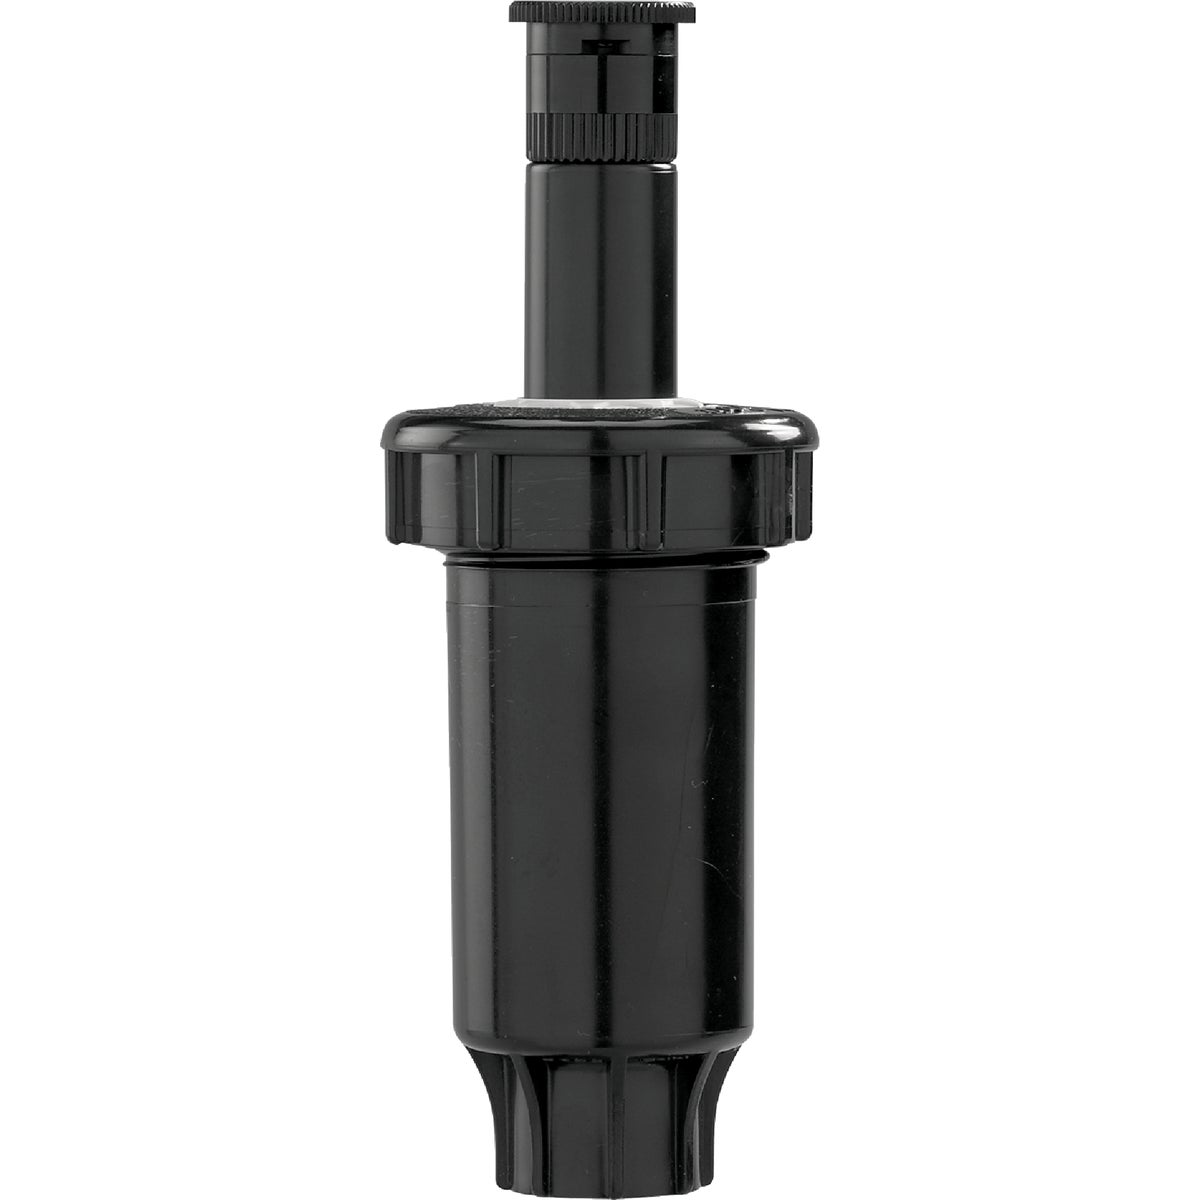 Item 709204, 2 In. 5400 series pop-up sprinkler with plastic nozzle.